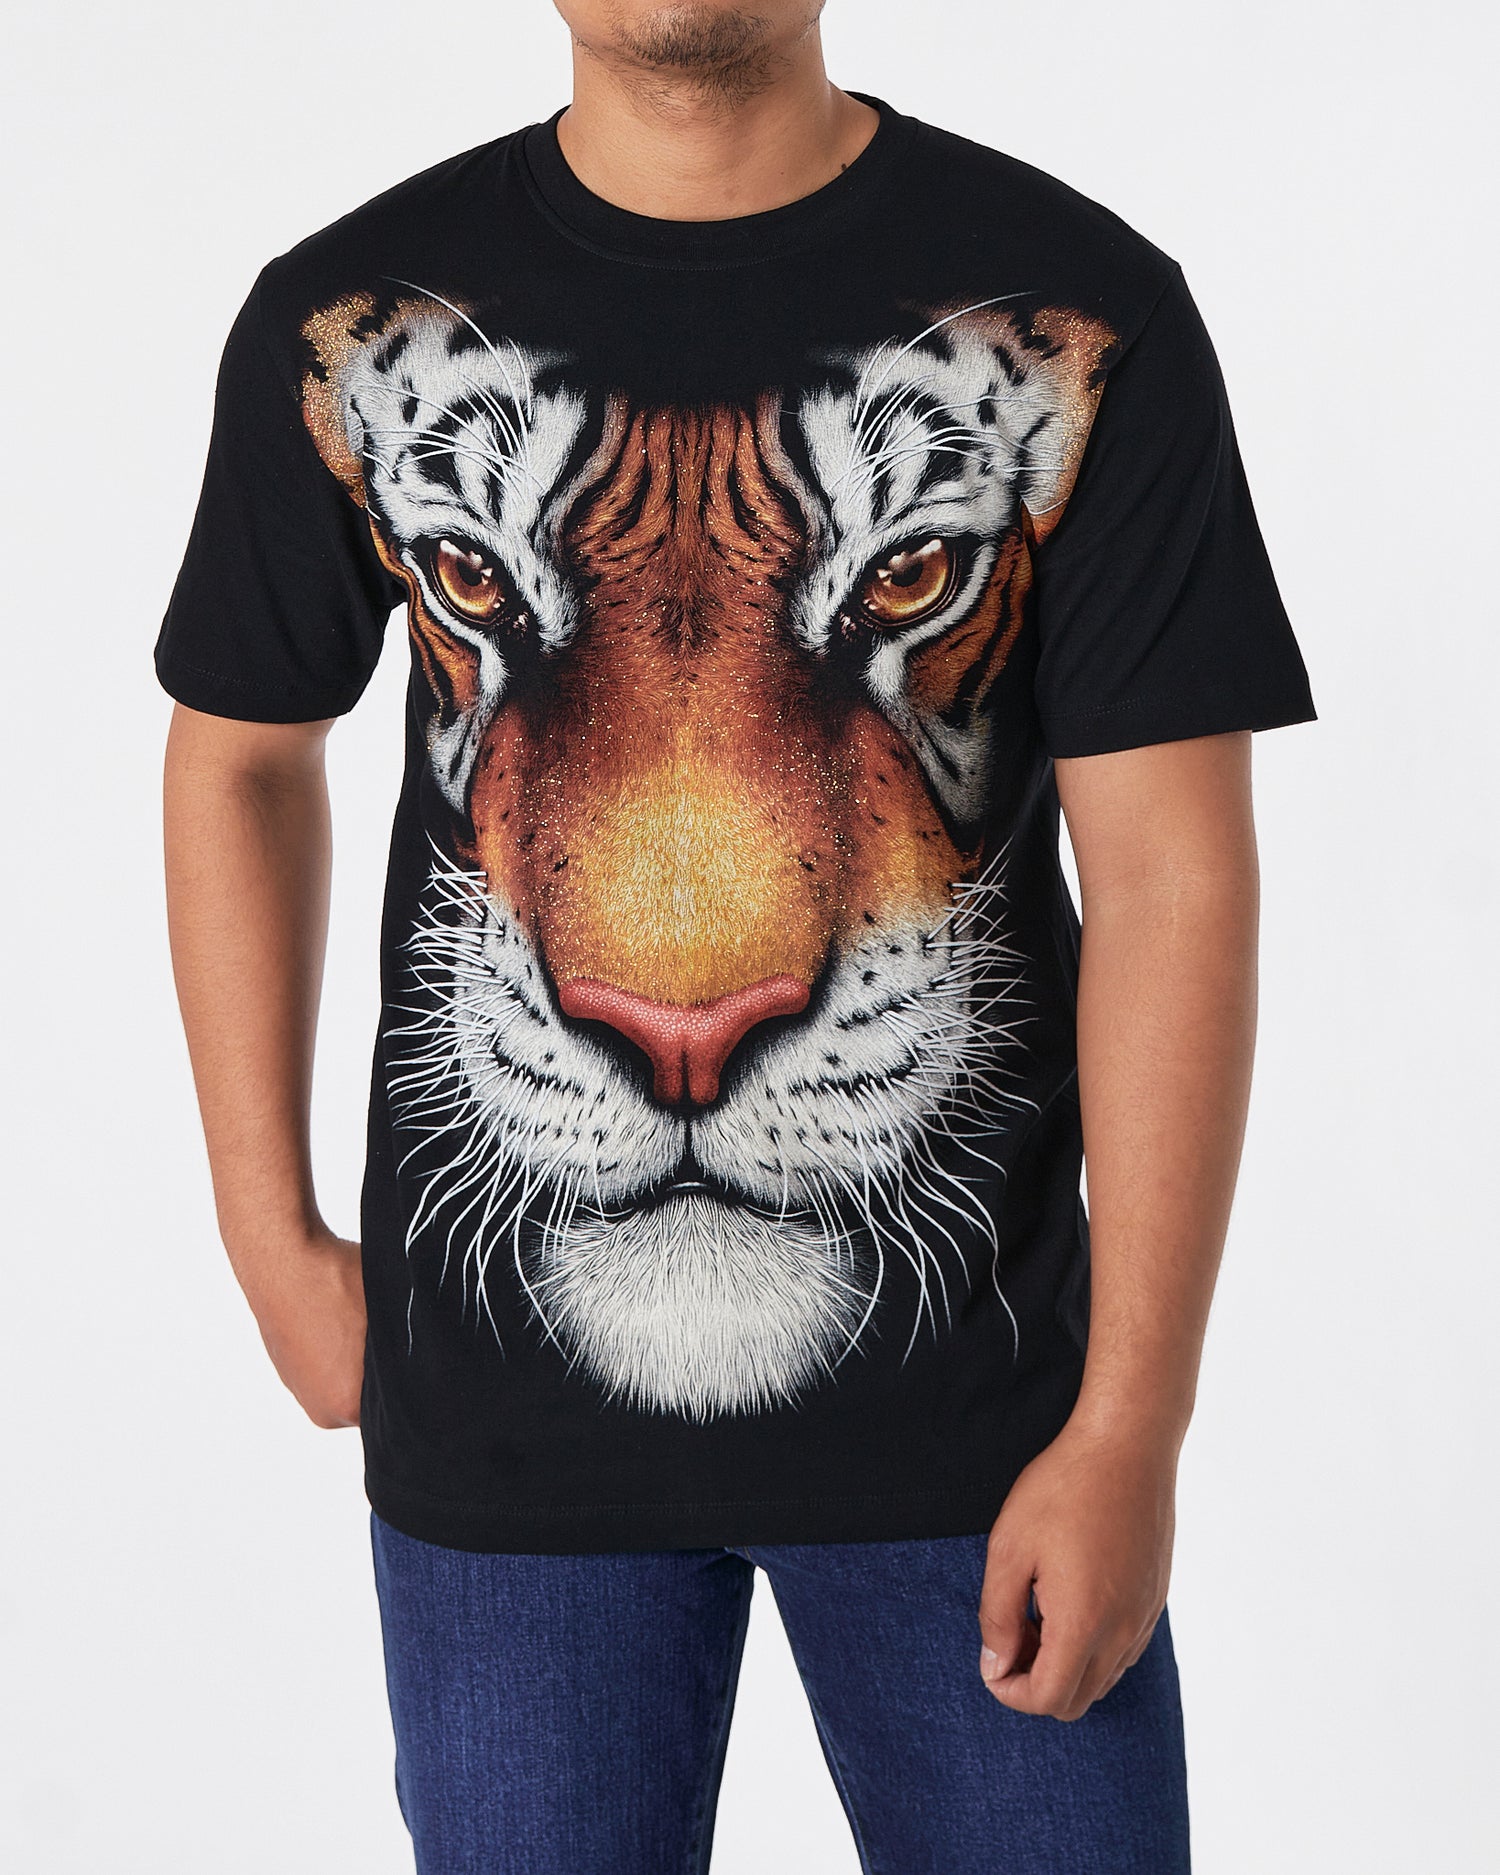 THA Tiger Front &amp; Back Printed Men Over Size T-Shirt 16.90